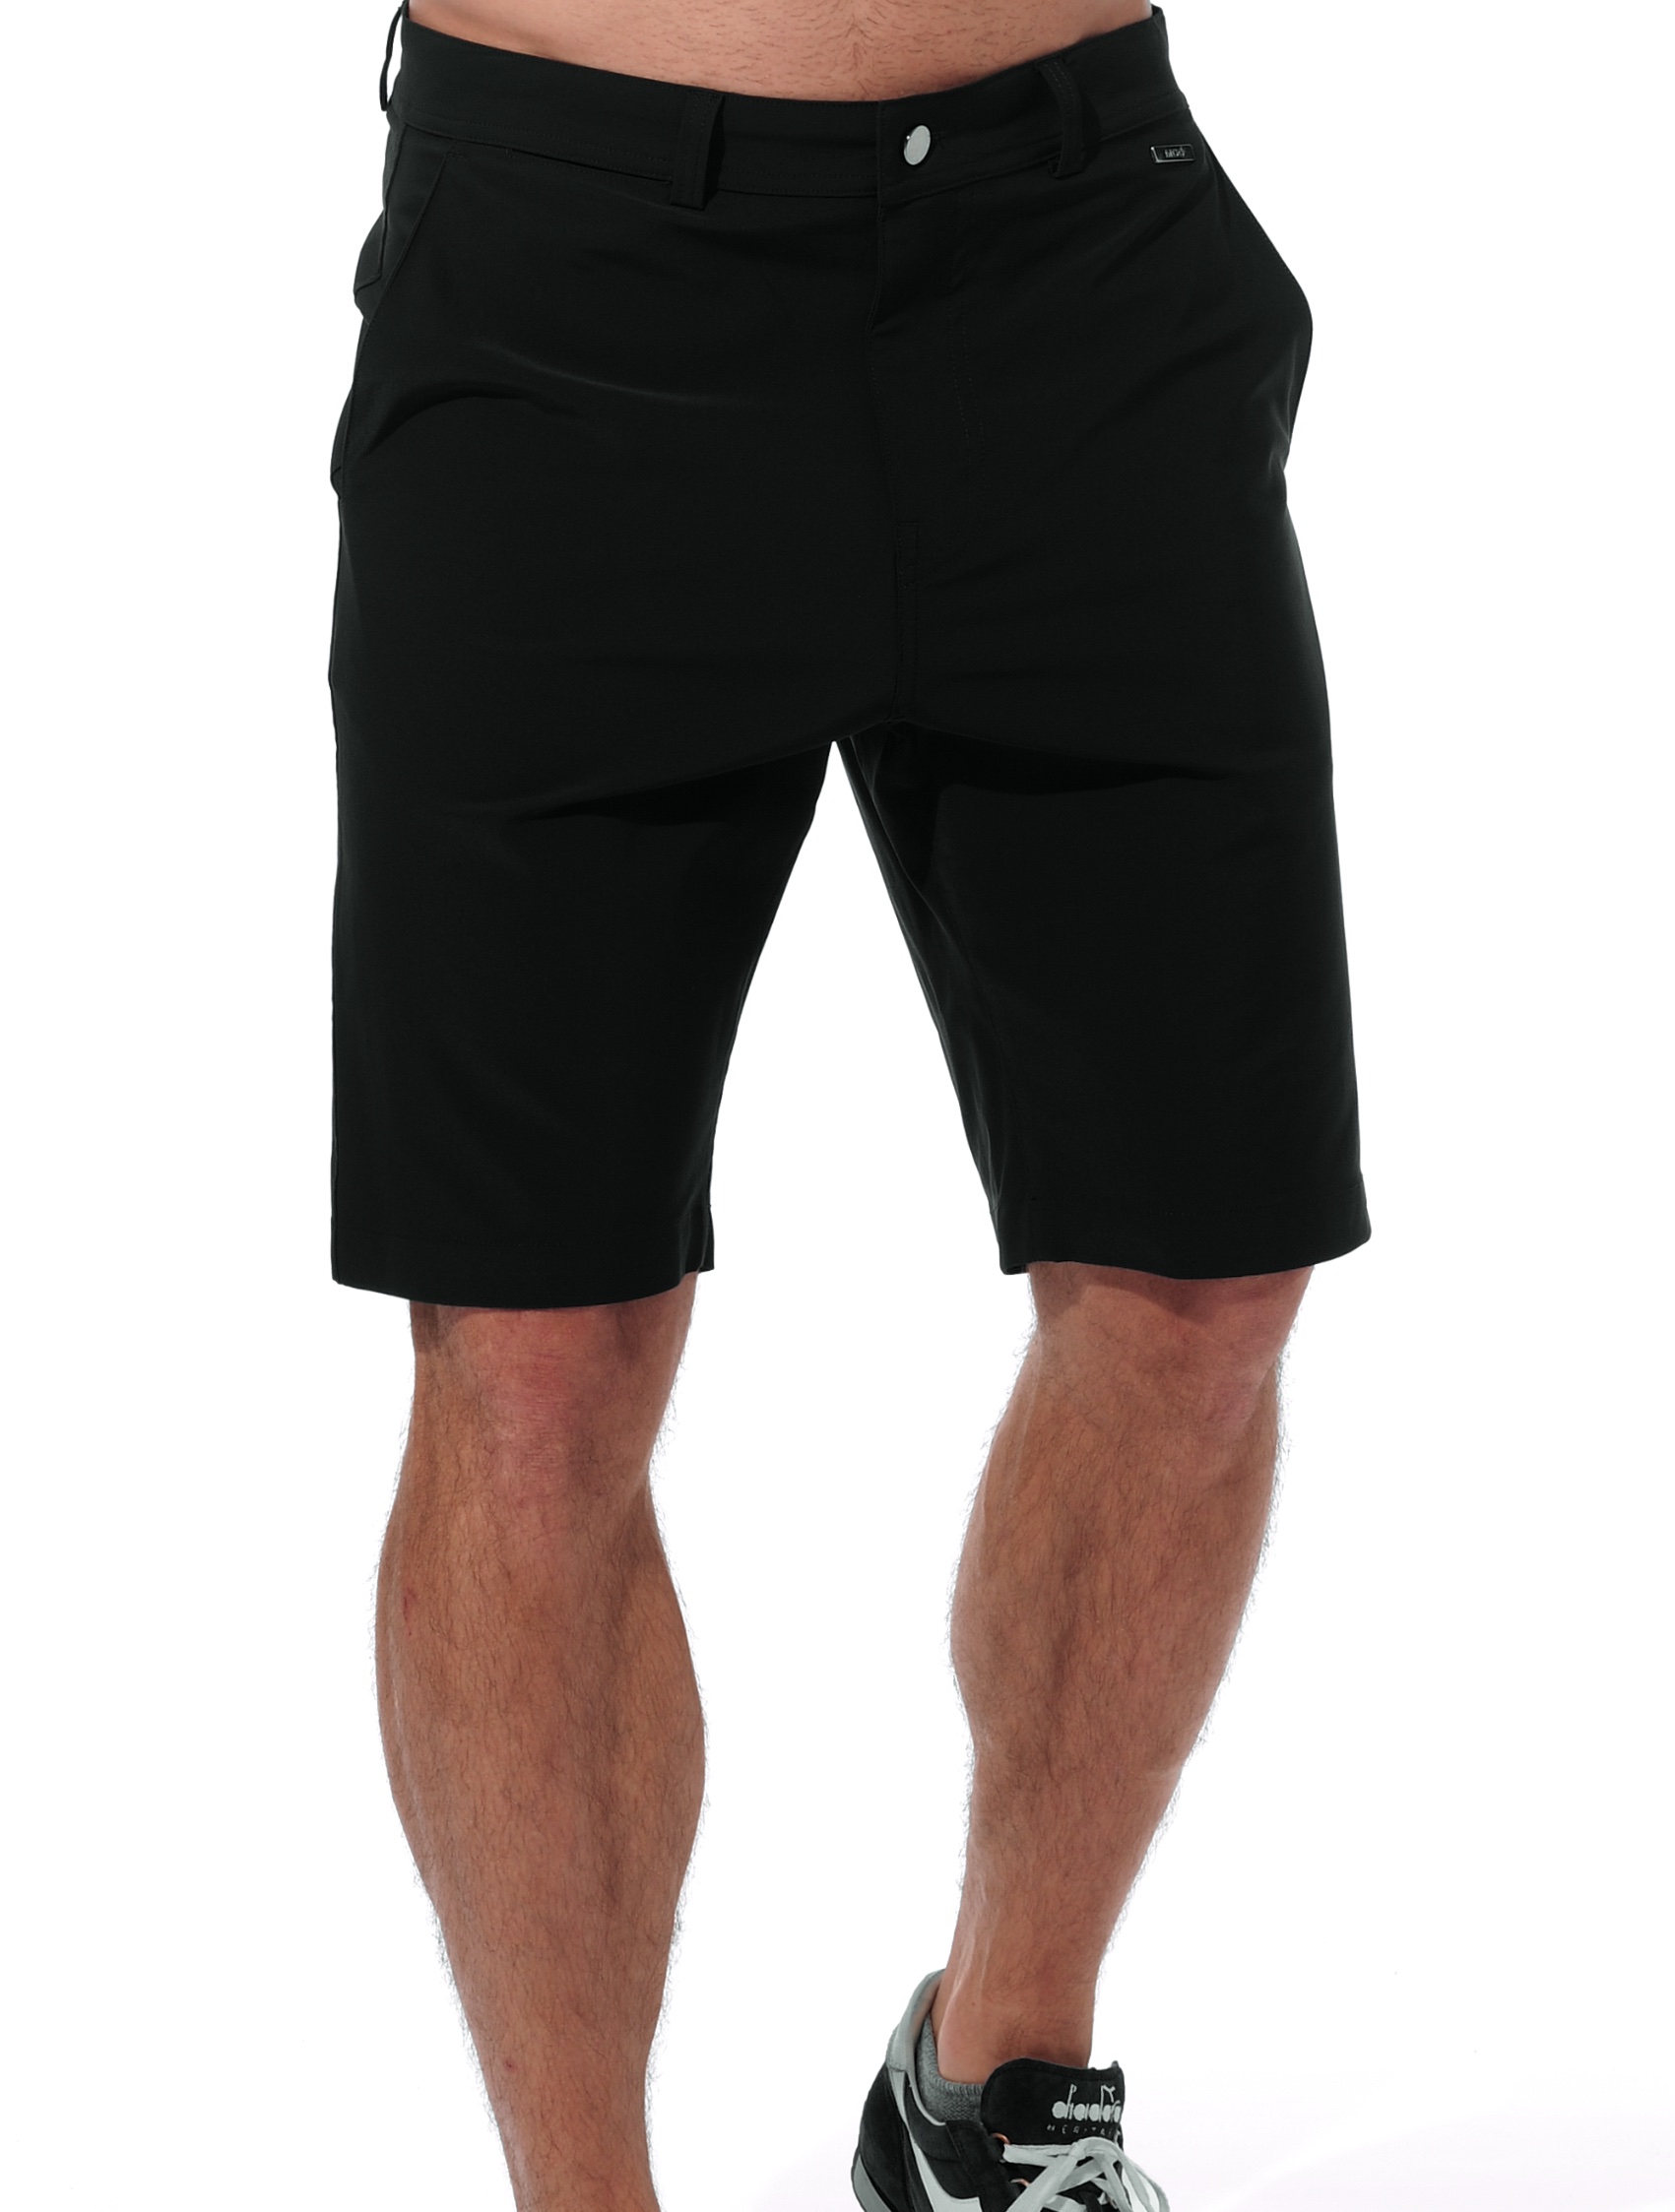 4way stretch shorts black 